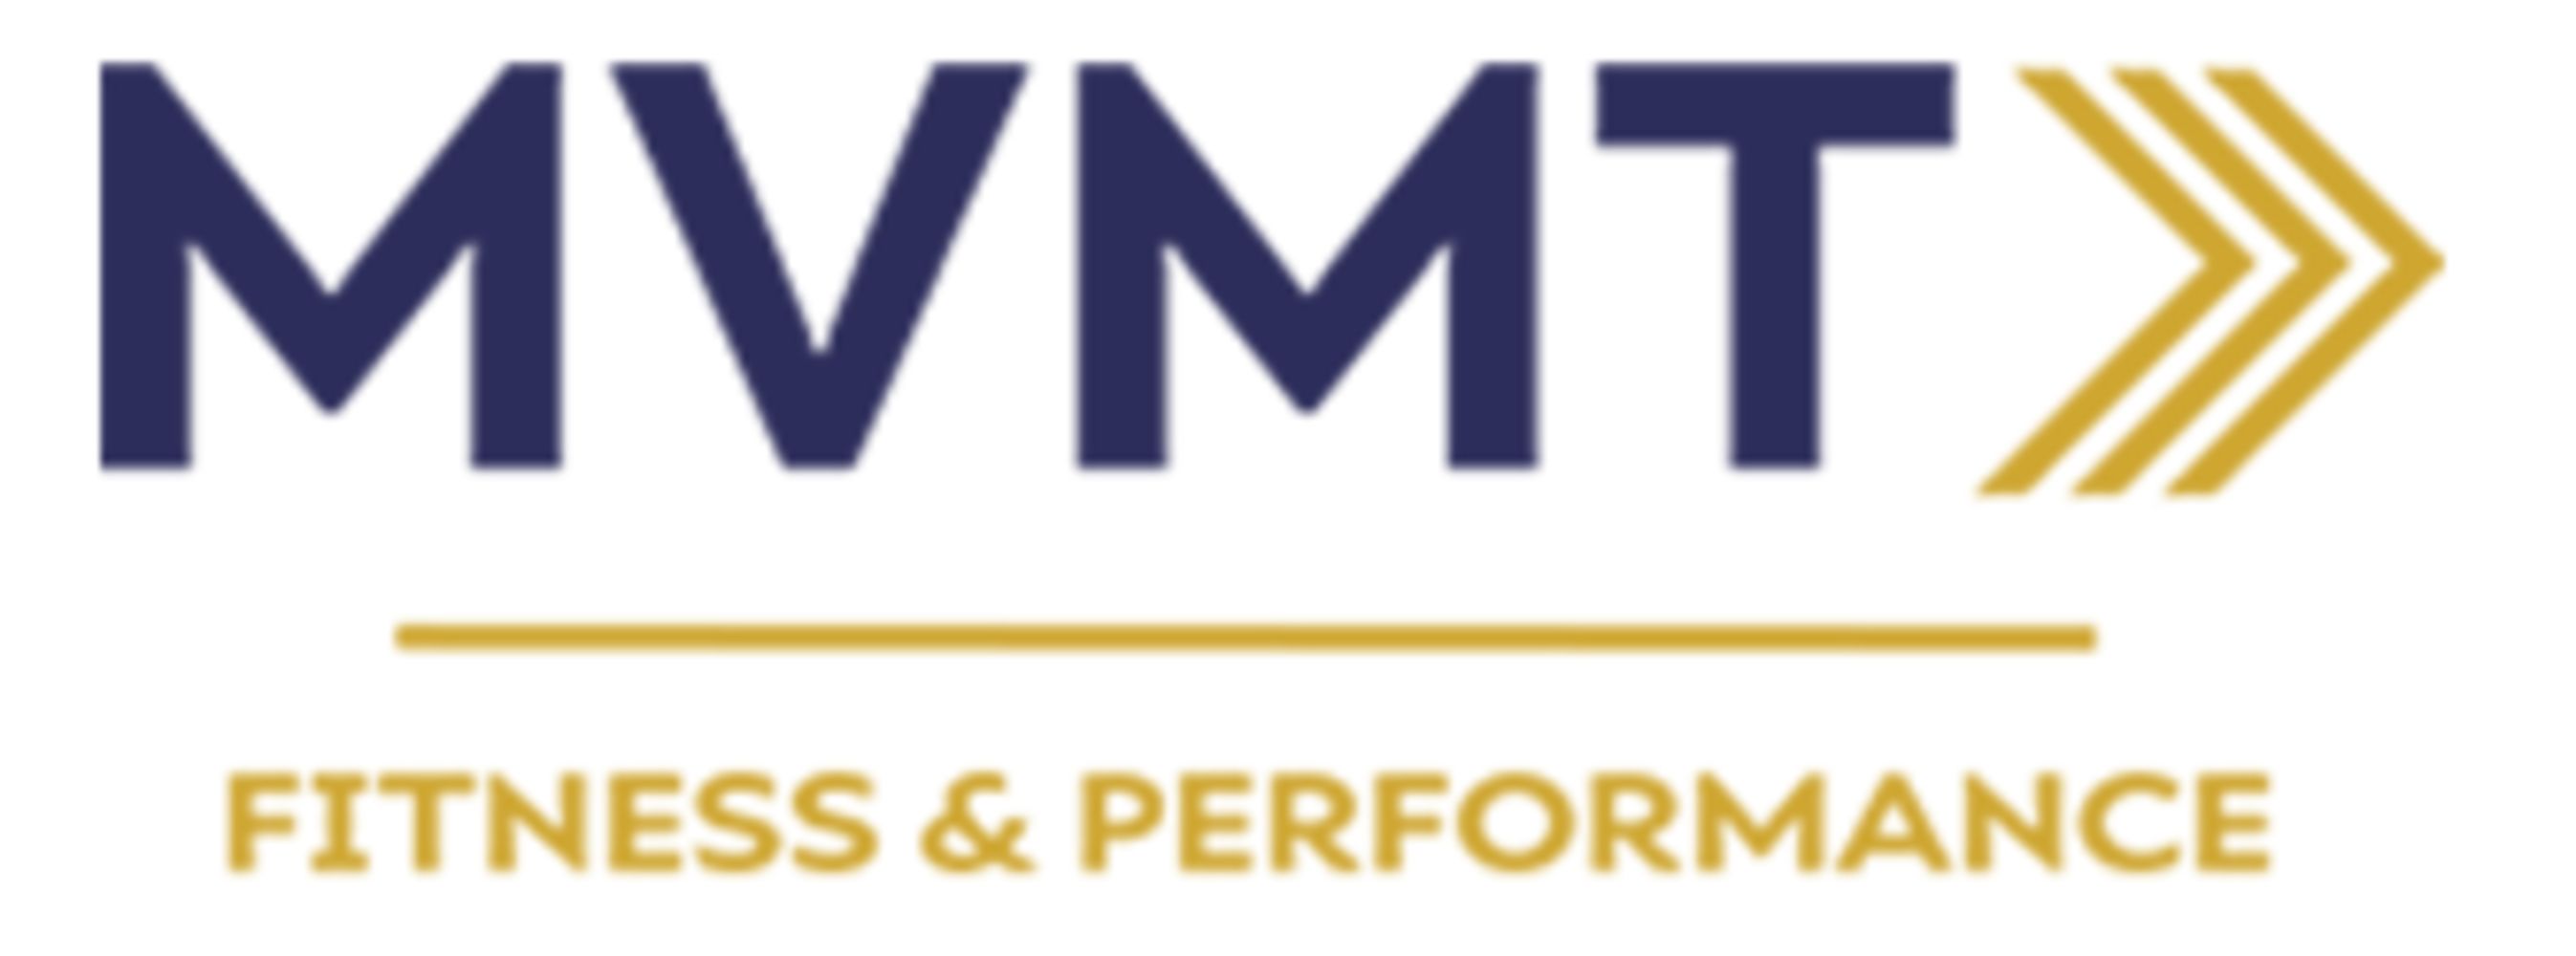 MVMT Fitness Facility